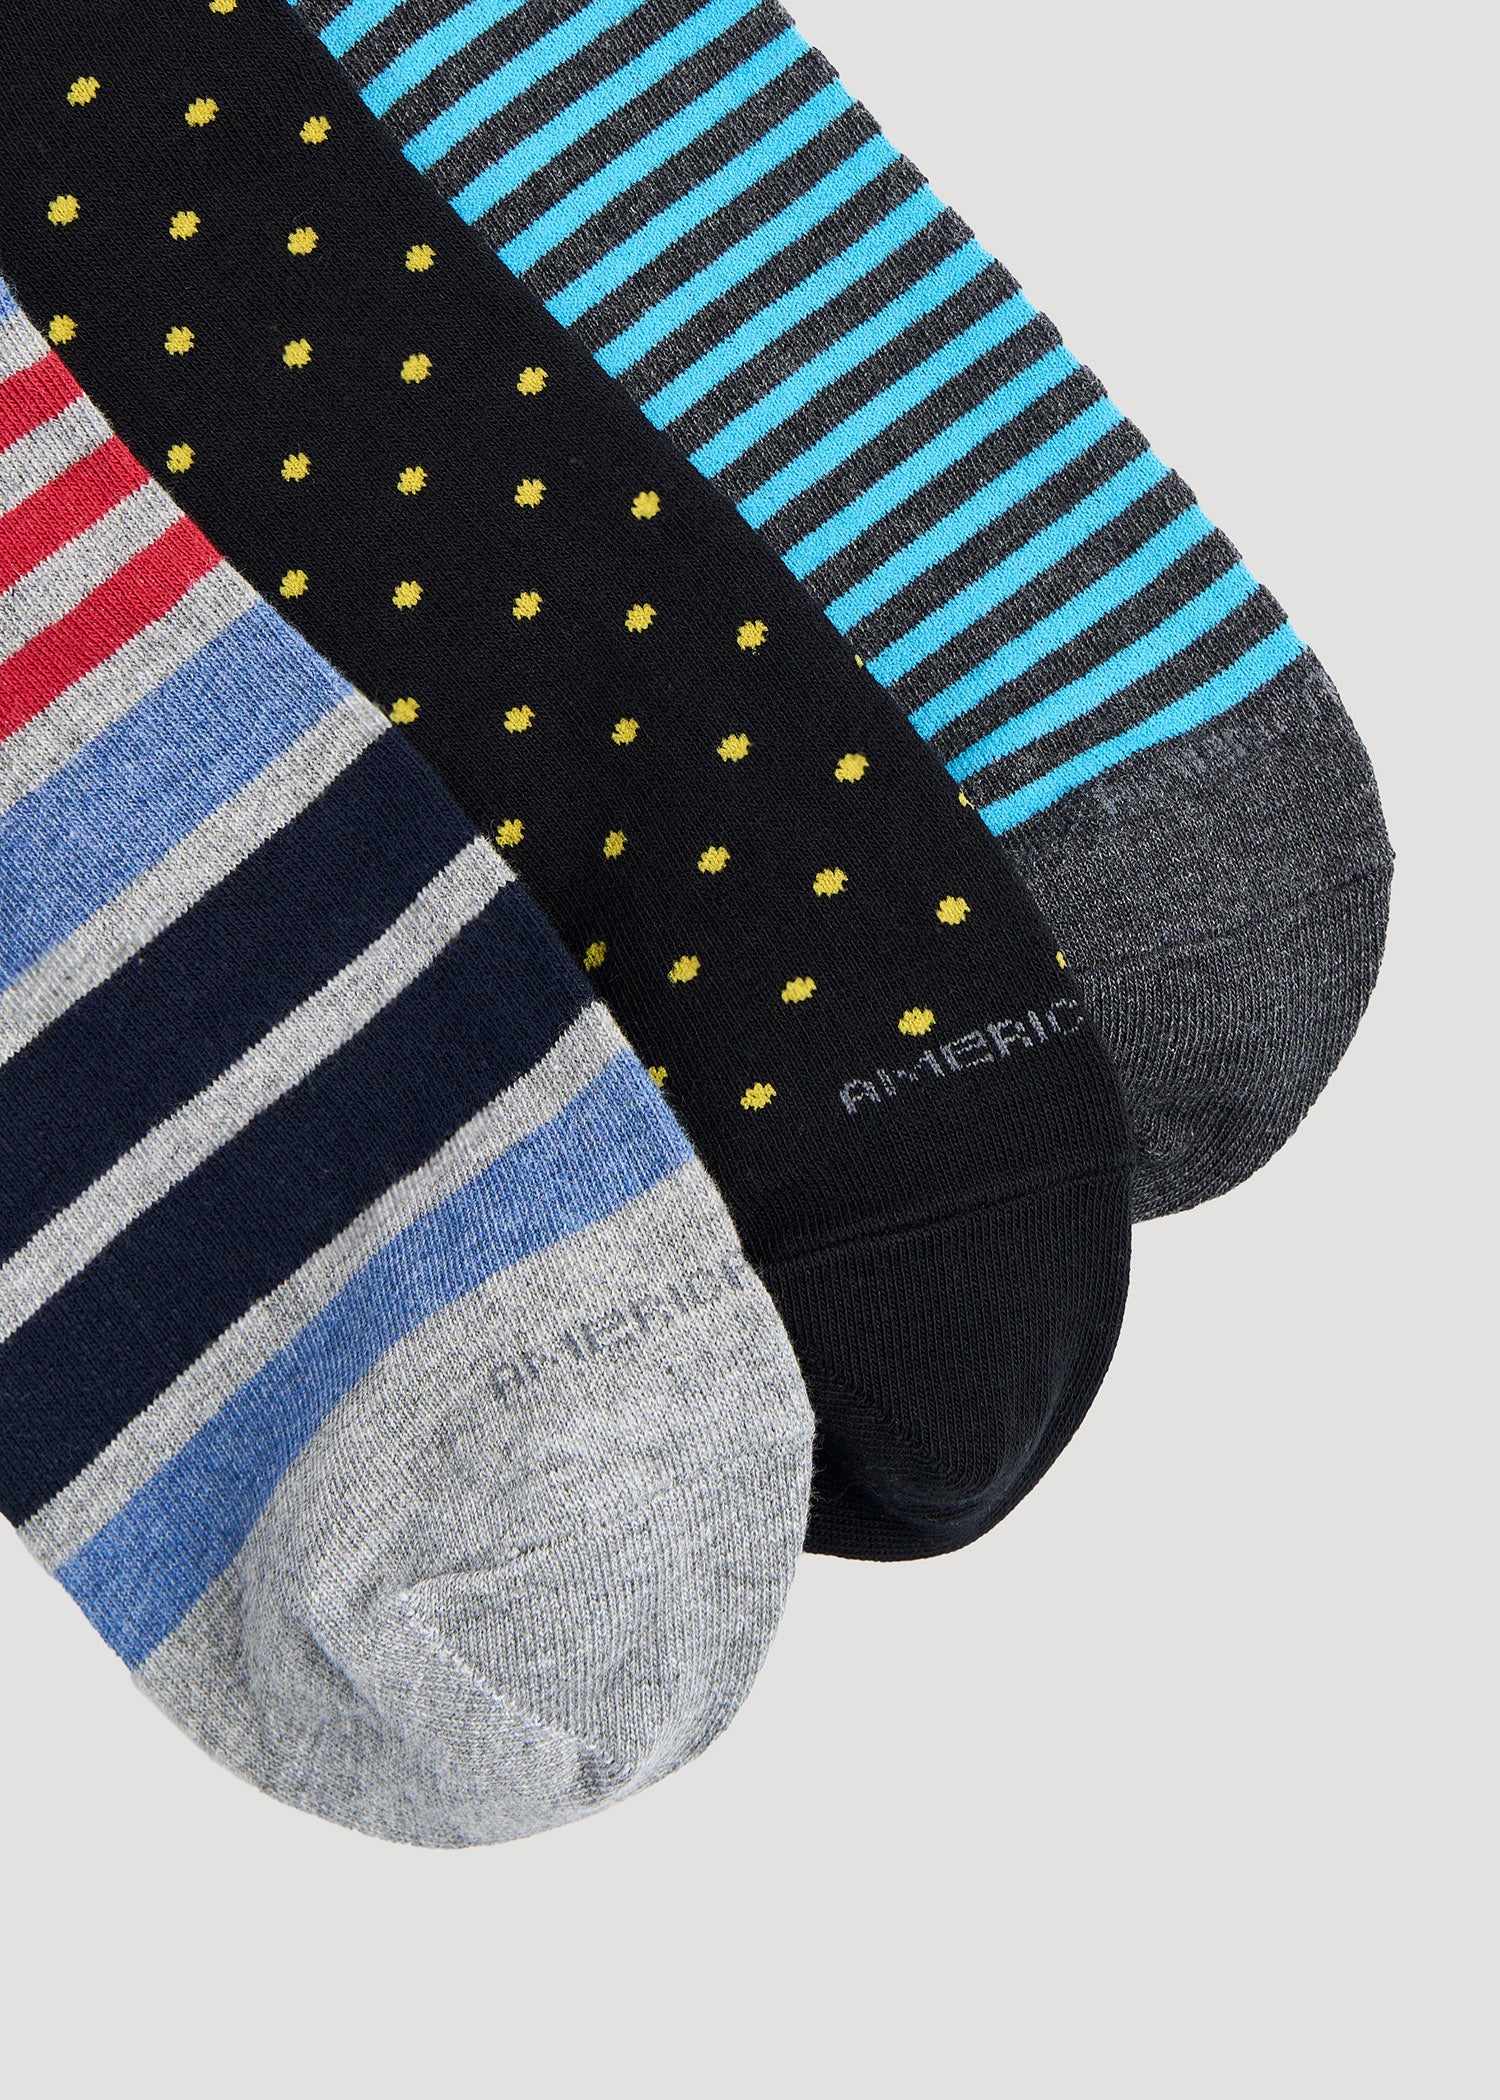 Mens Socks | Mens socks, Mens dress socks, Neiman marcus men